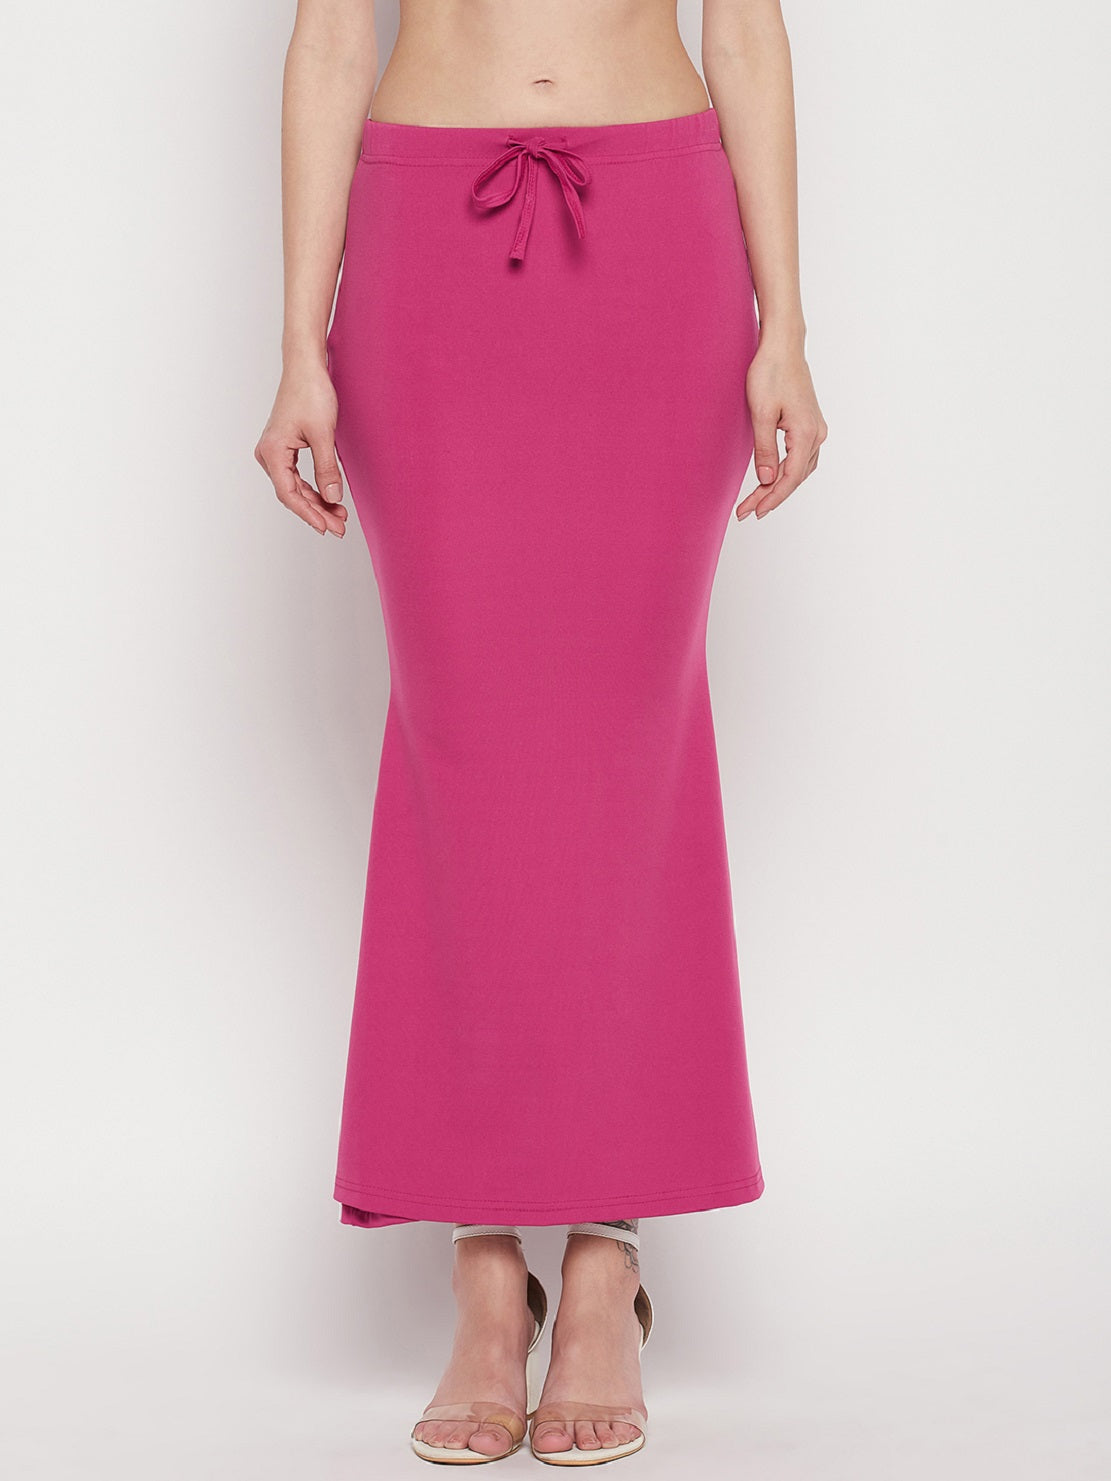 Plain Cotton Saree Shapewear, Black,Pink, Size: Medium at Rs 180